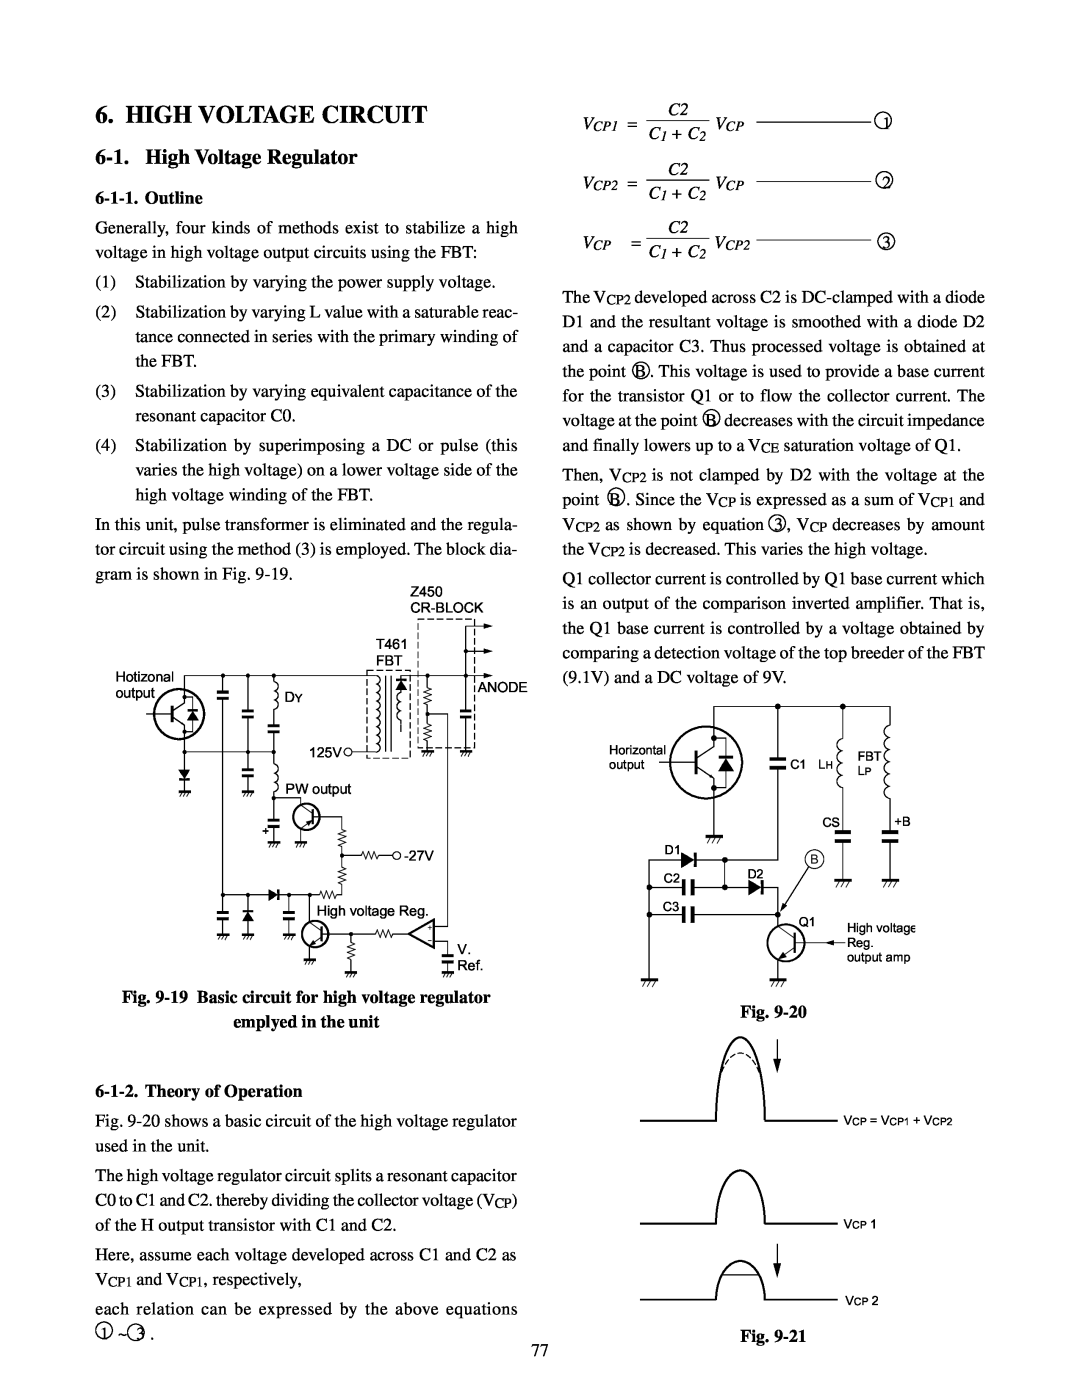 Toshiba TW40F80 manual High Voltage Circuit, High Voltage Regulator, Outline, 19 Basic circuit for high voltage regulator 